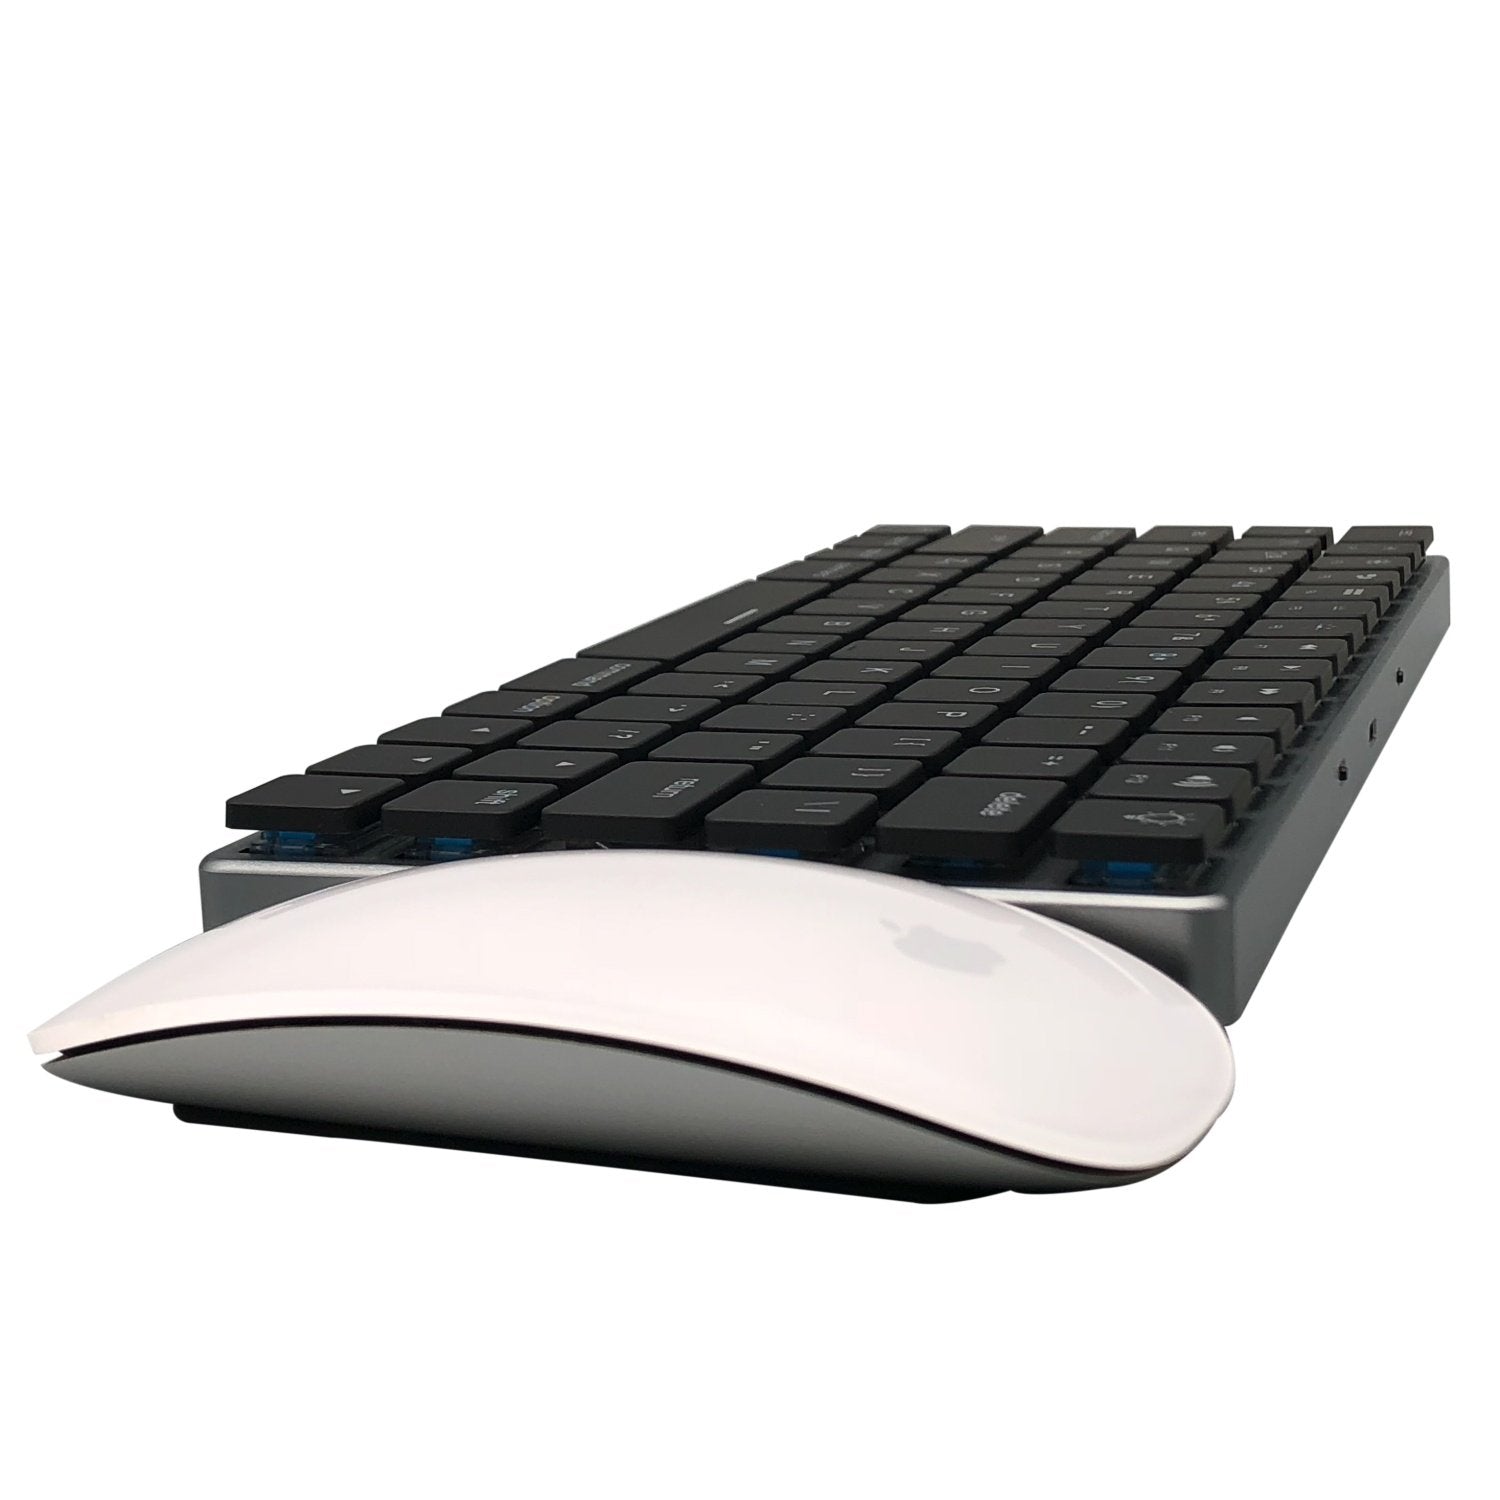 Smartinny Wireless Mechanical Keyboard KS-1